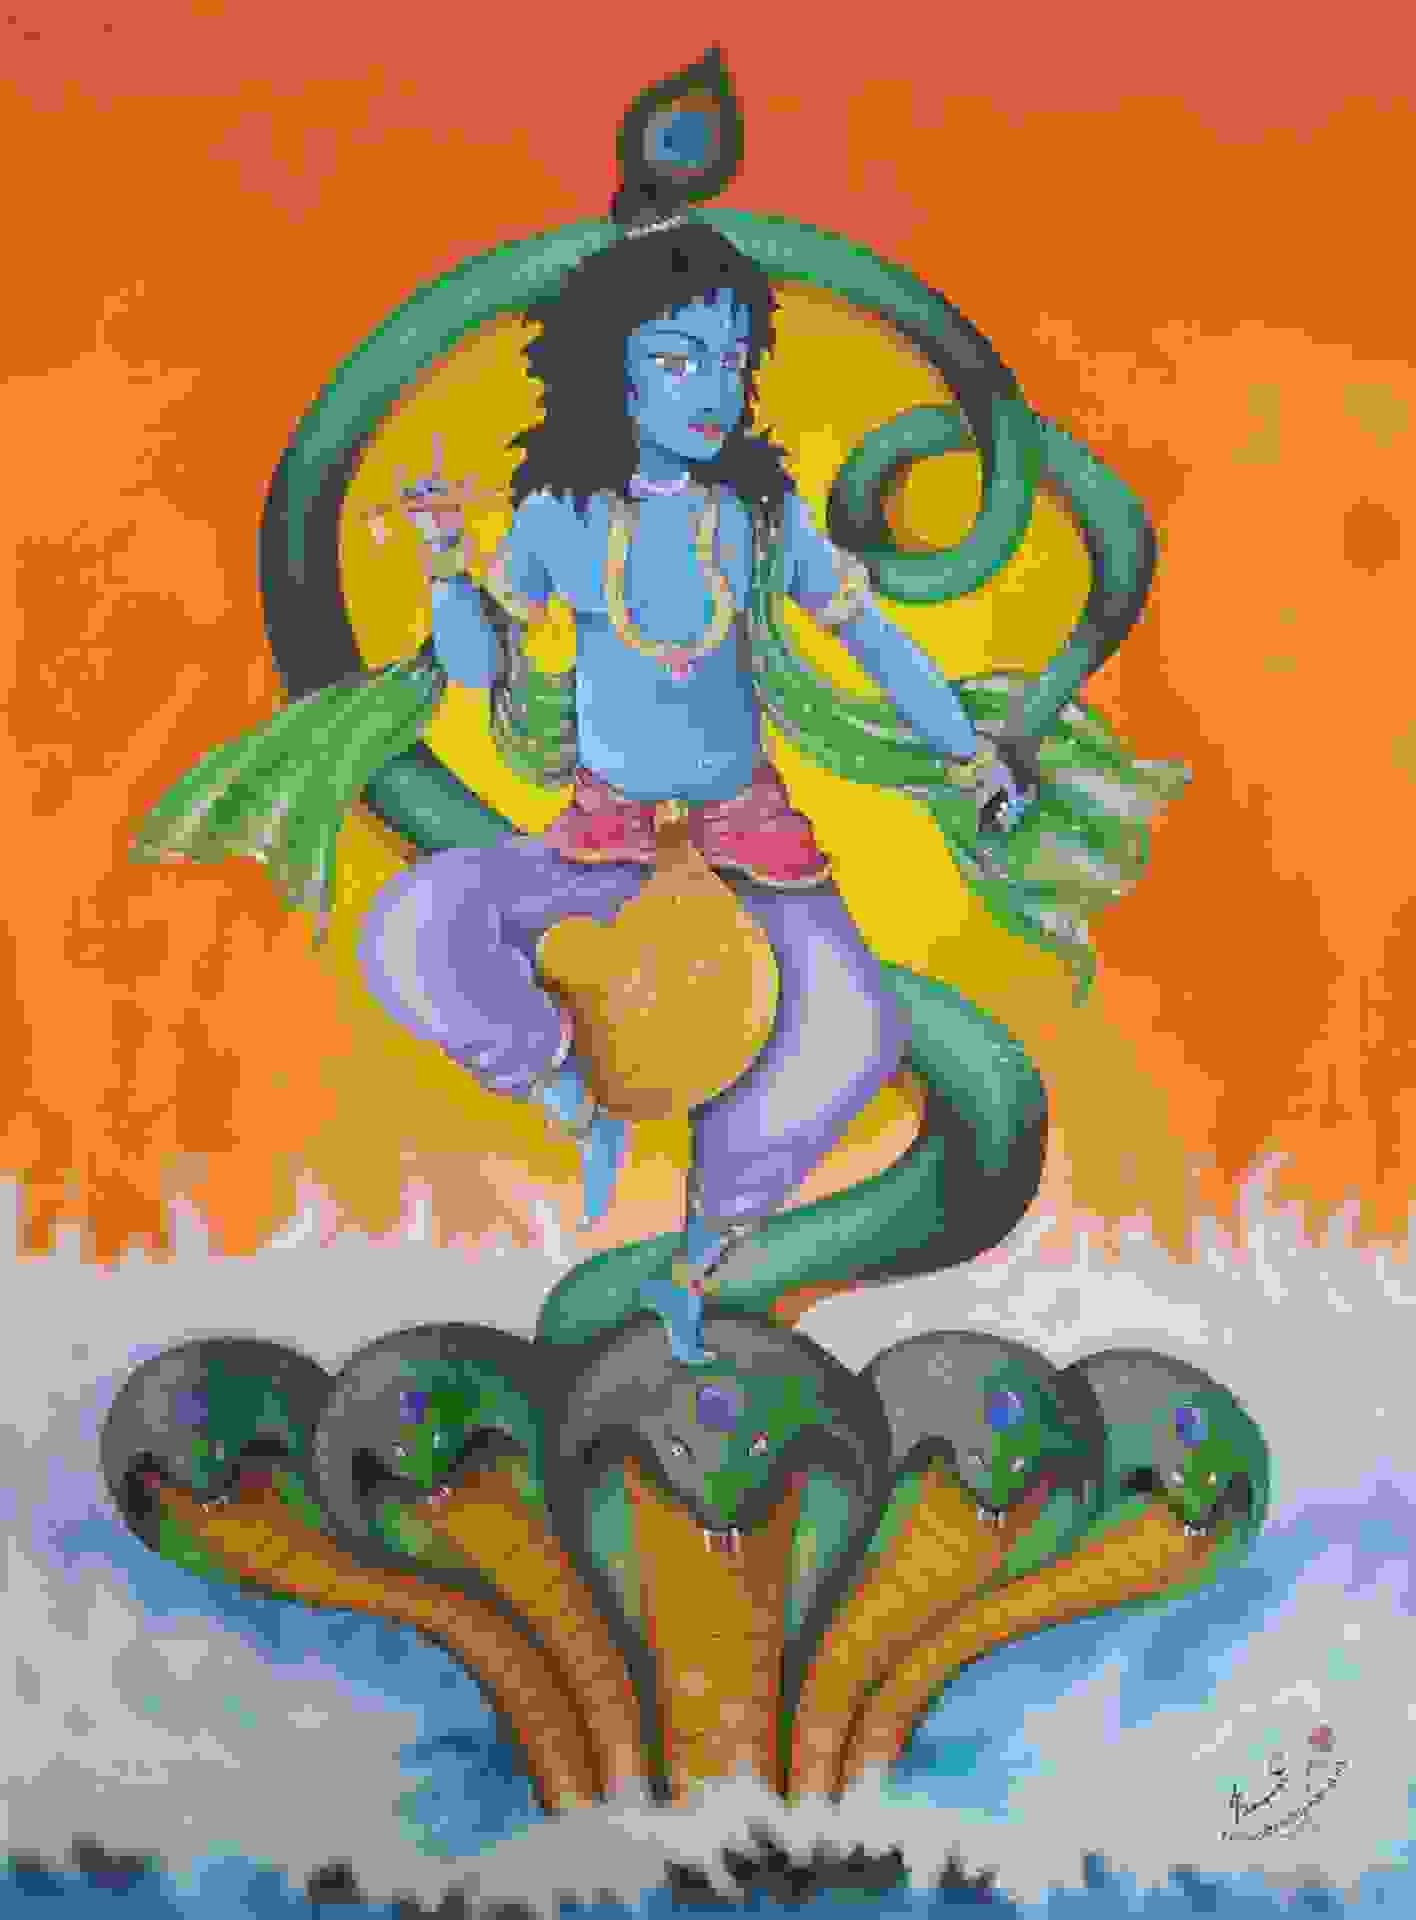 Painting Of Kalinga Mardhana In Acrylic On Cloth Size 3x5